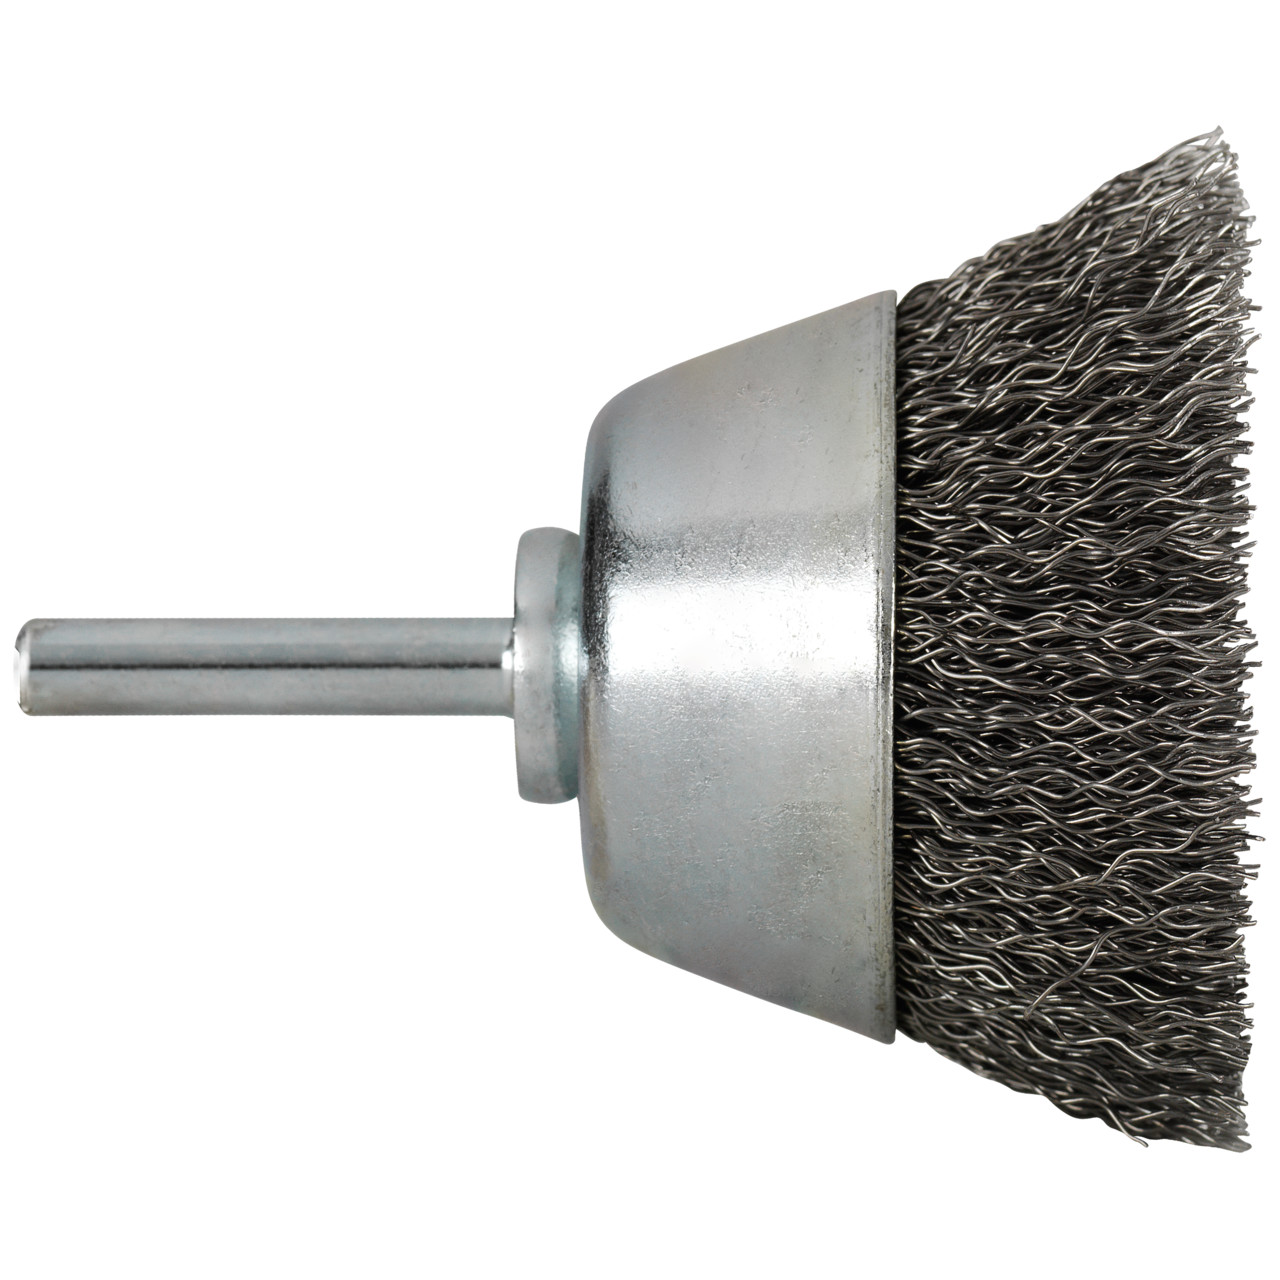 Tyrolit Spazzole a tazza DxLxH-GExI 60x15x20-6x30 Per acciaio, forma: 52TDW - (spazzole a tazza), Art. 890763